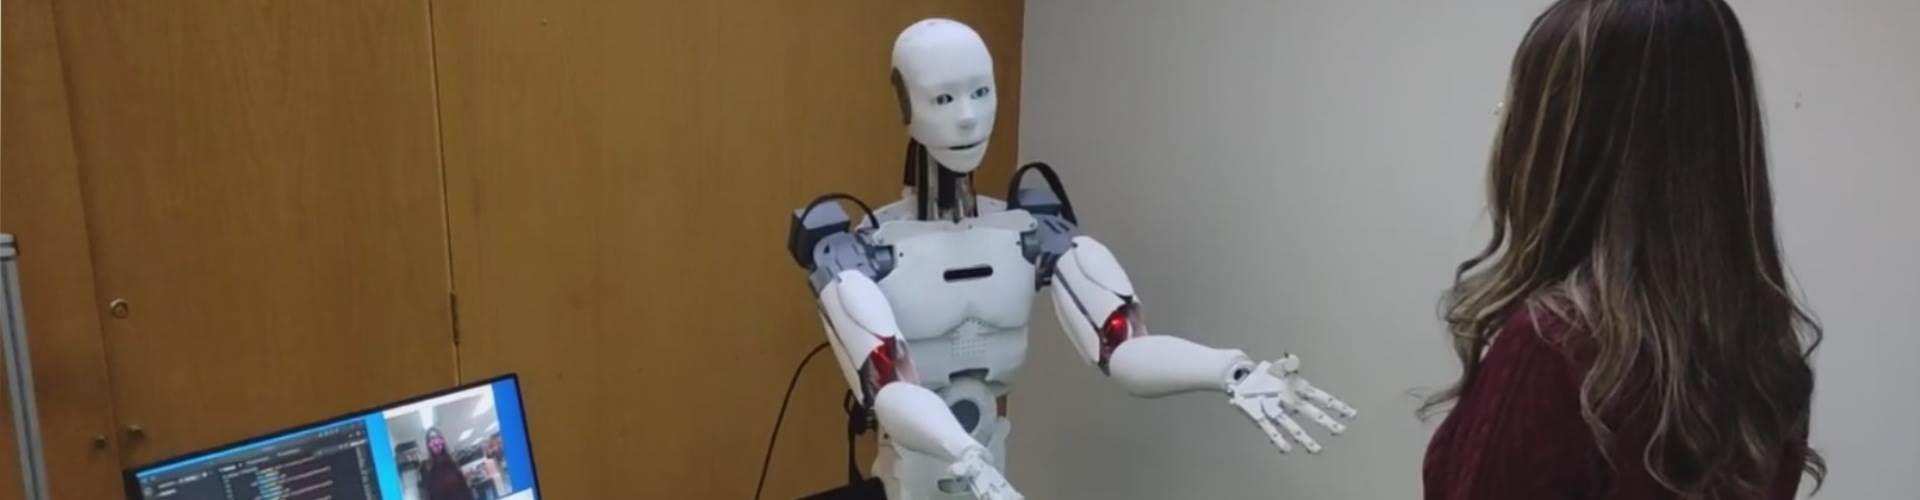 Construyen robot para terapia de autismo infantil